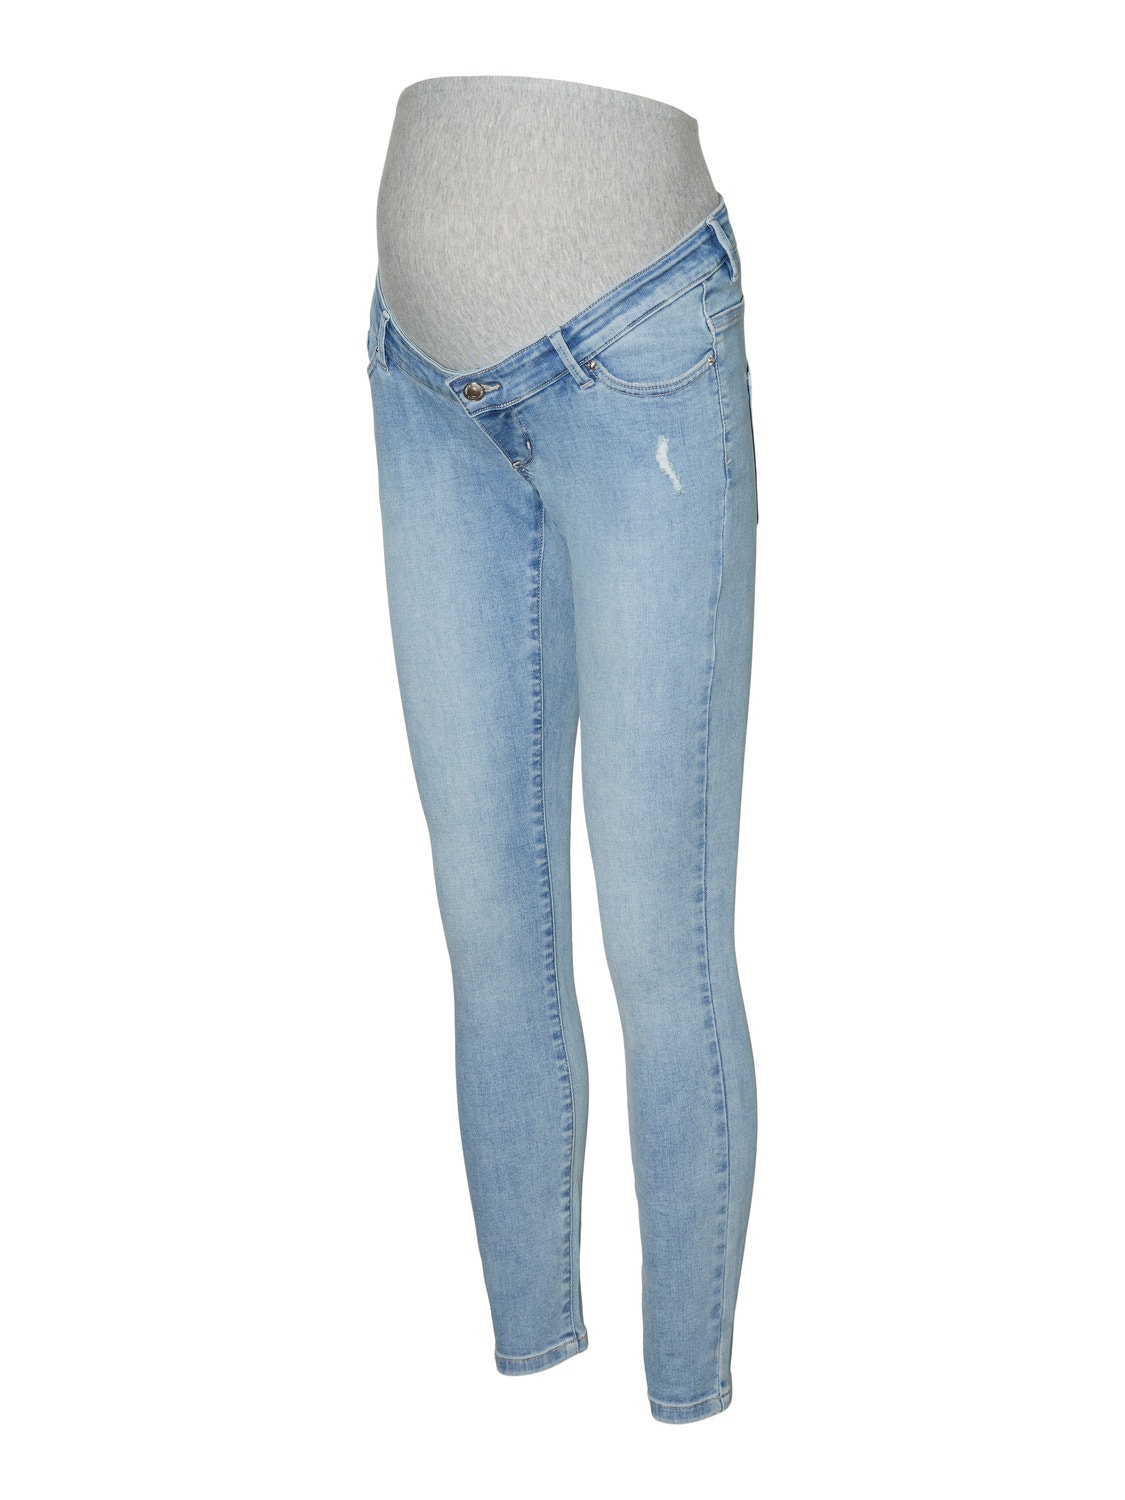 MAMA Skinny Jeans - Denim blue - Ladies